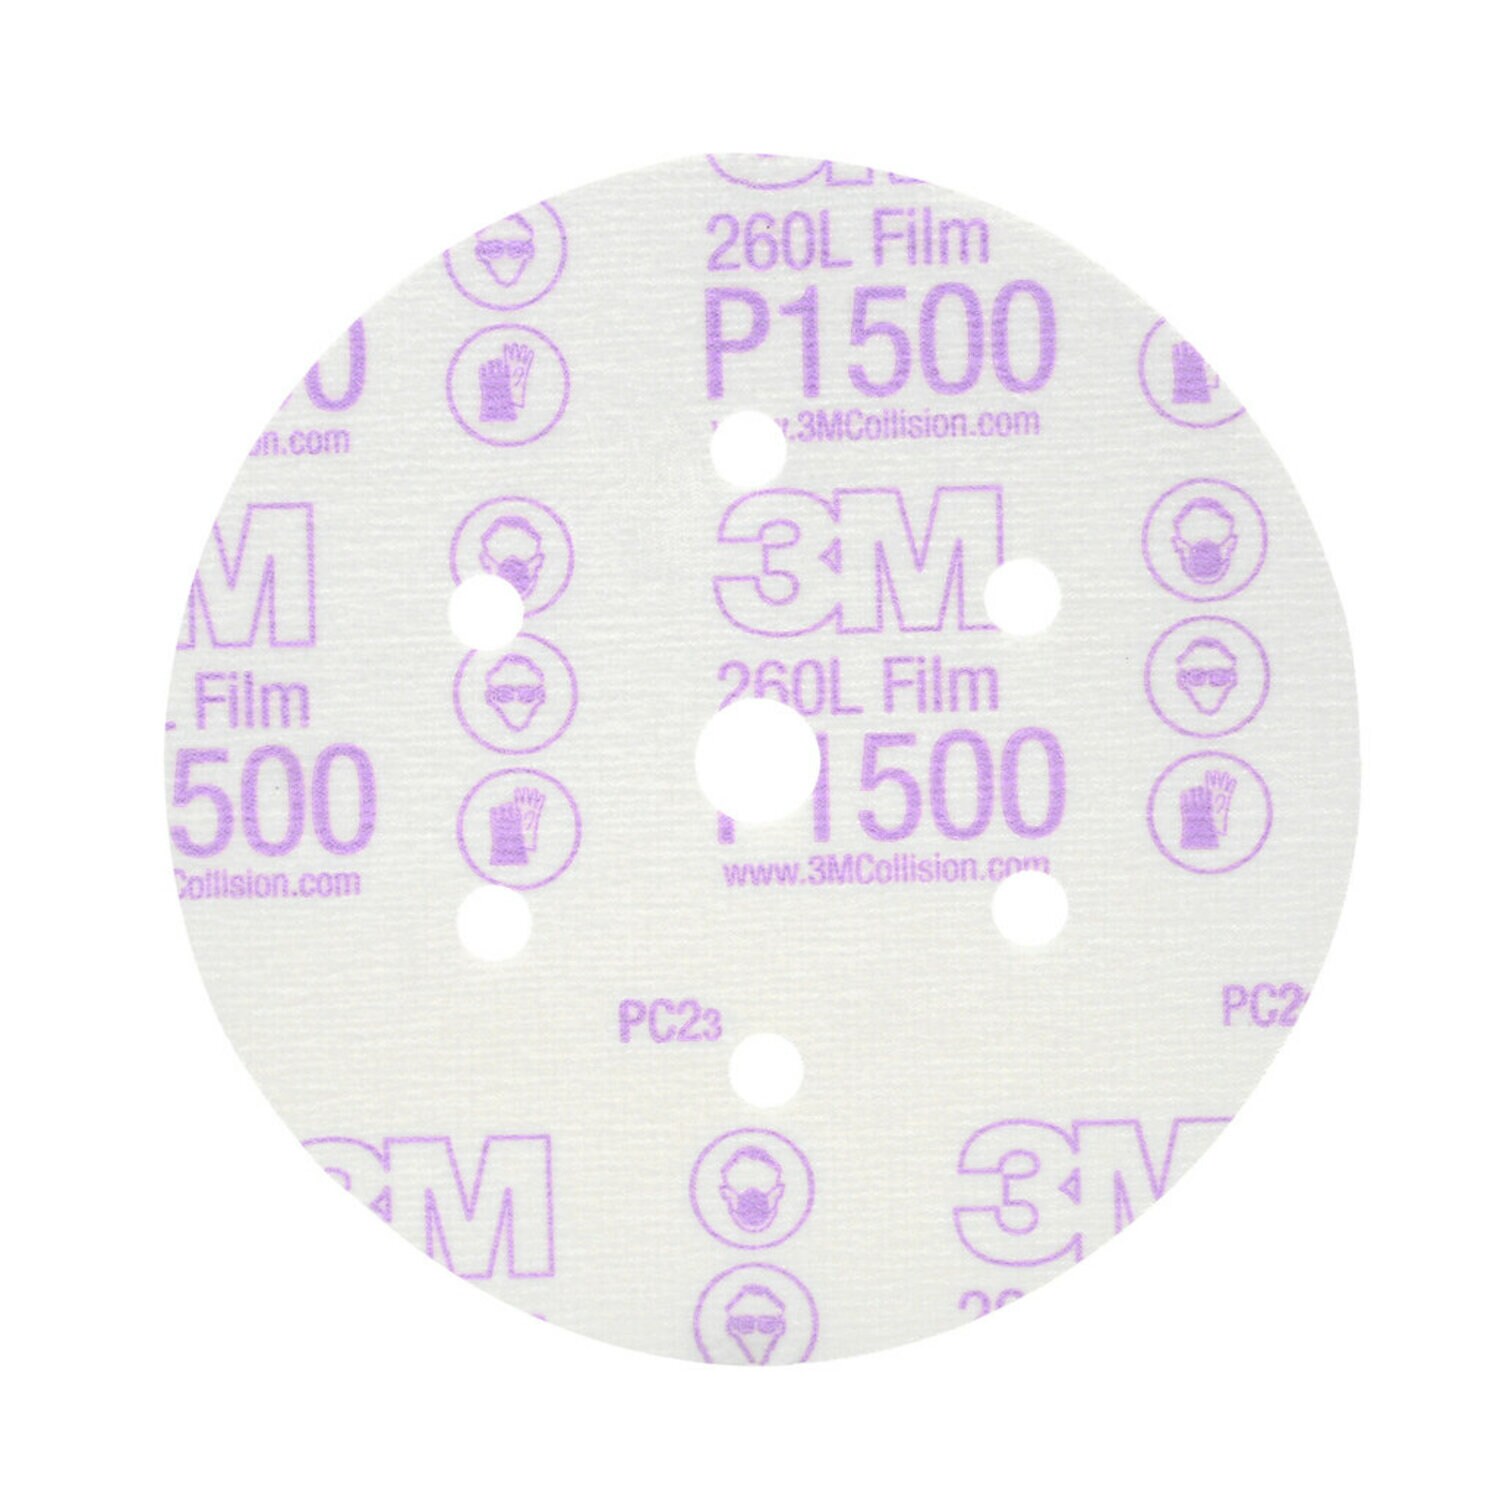 7000119694 - 3M Hookit Finishing Film Abrasive Disc 260L, 01050, 6 in, Dust Free,
P1500, 100 discs per carton, 4 cartons per case